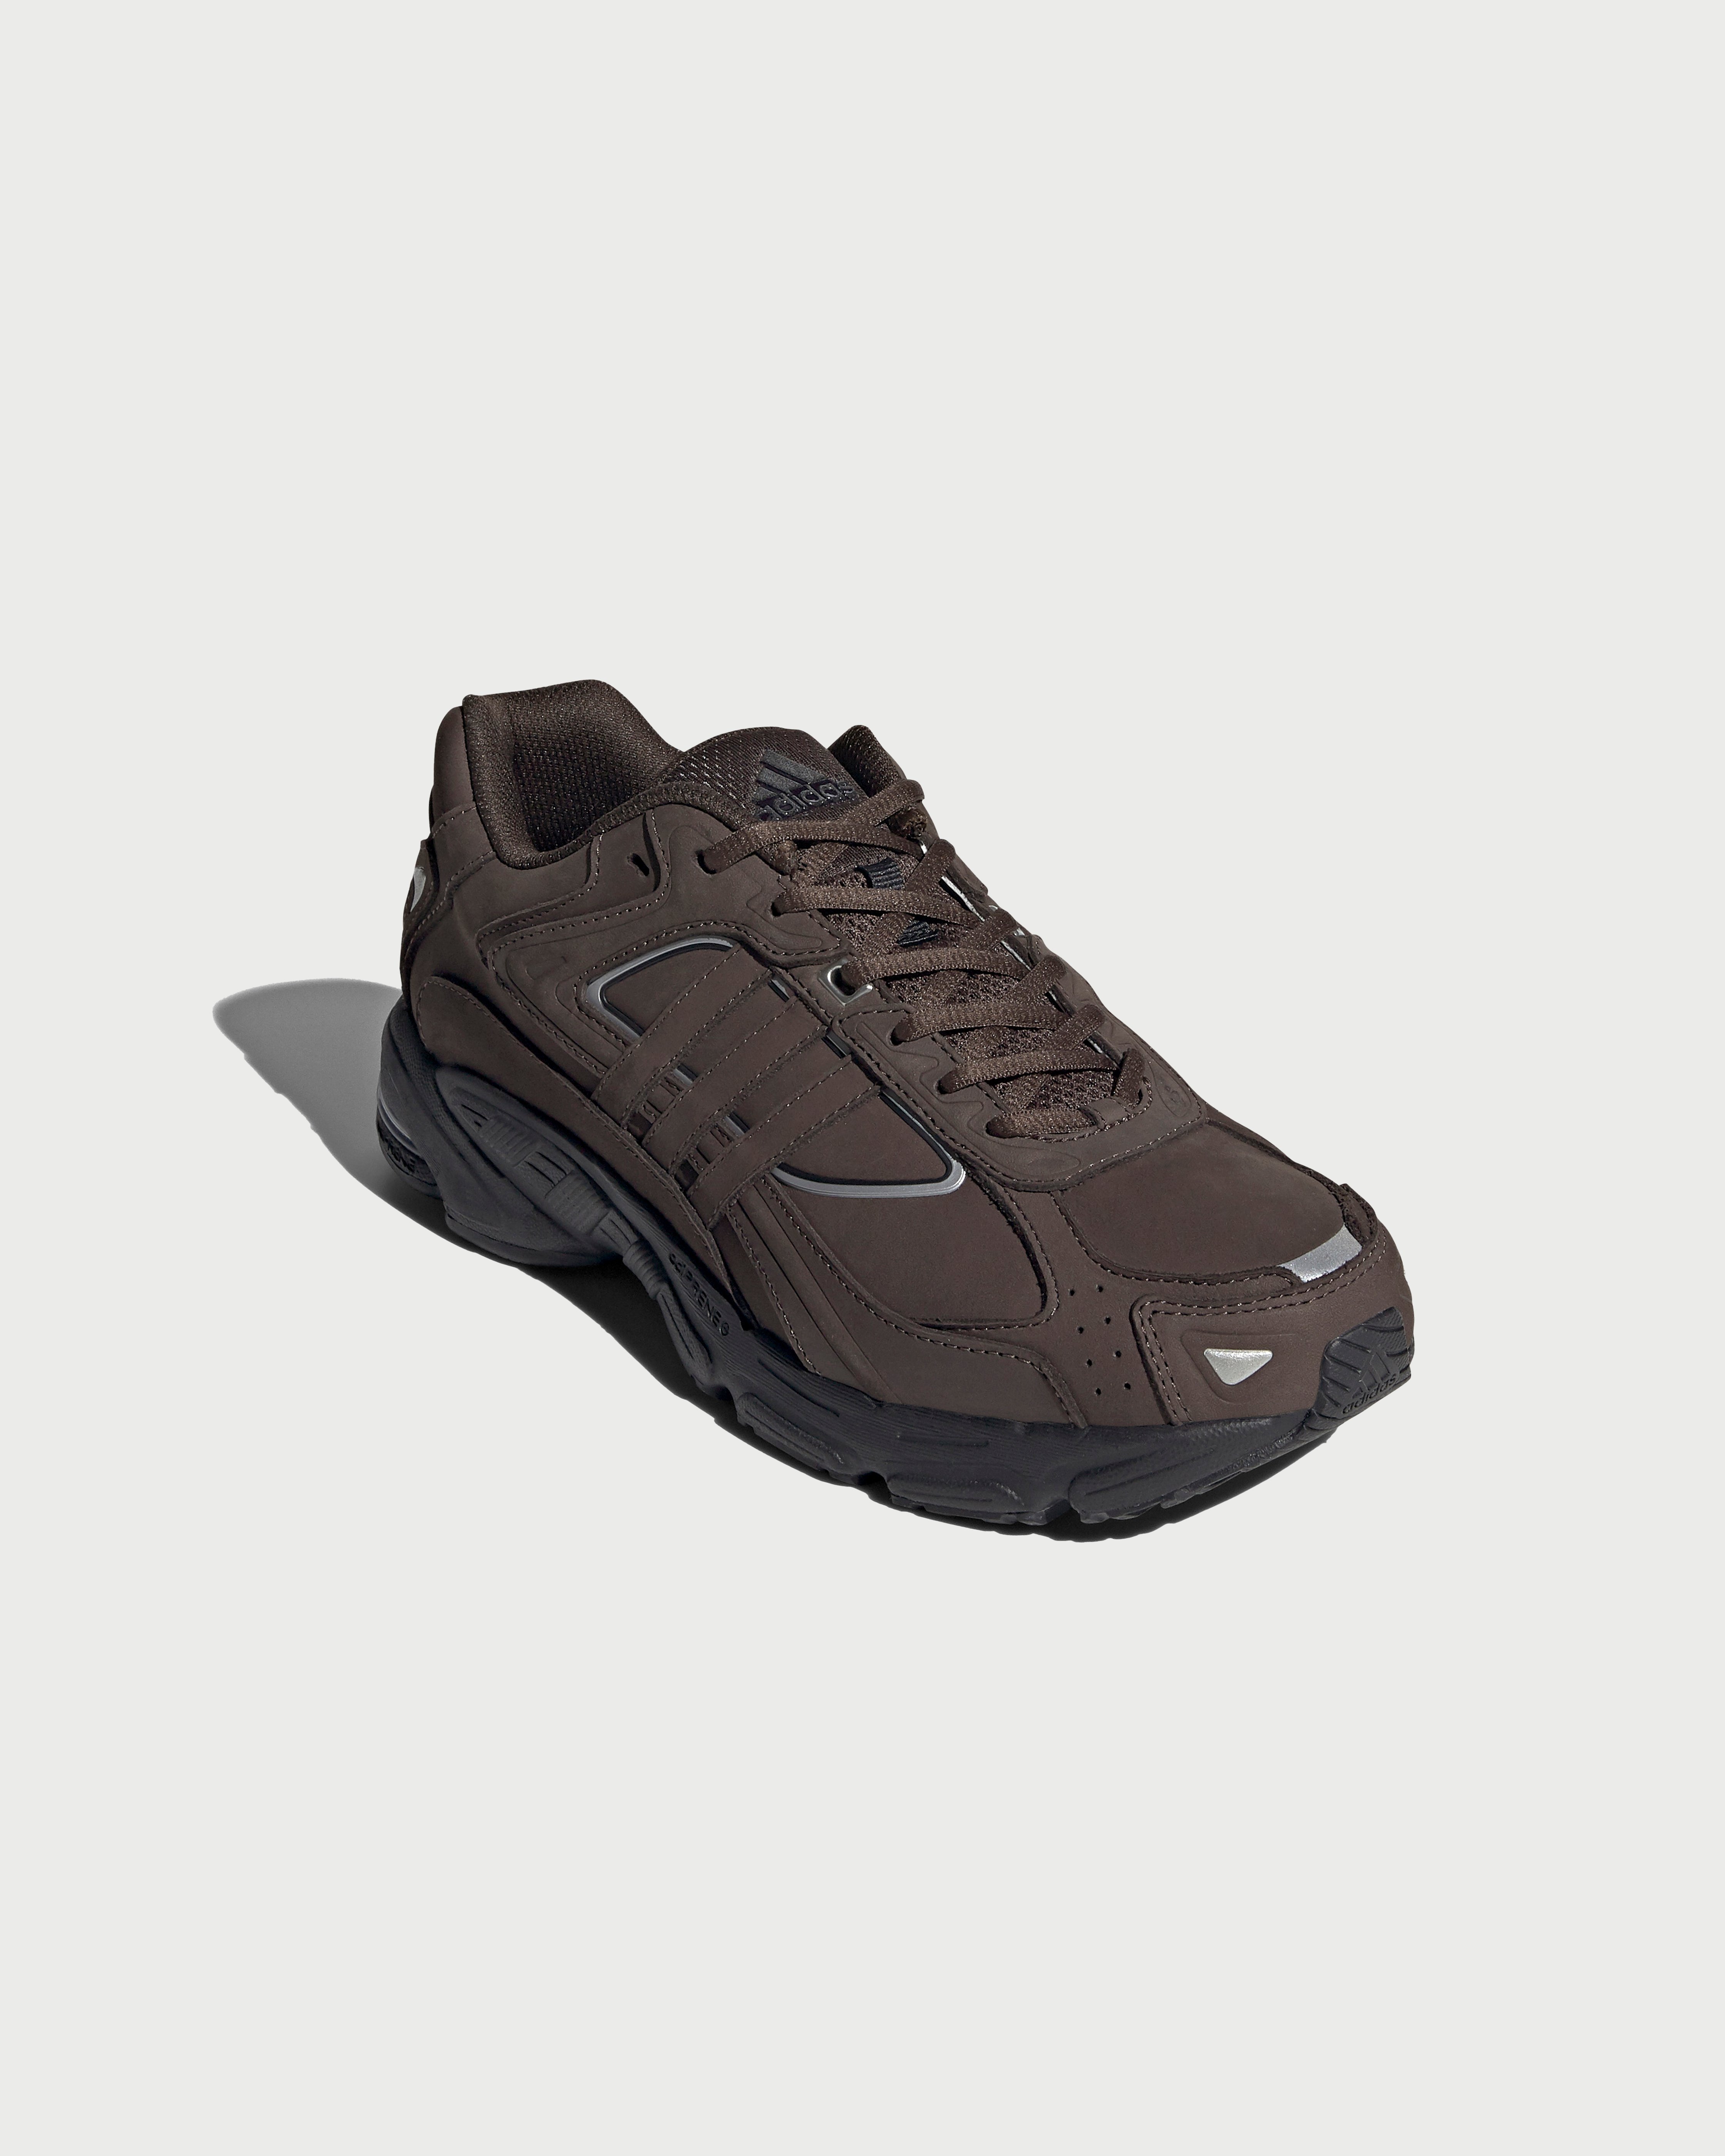 Adidas - Response CL Brown - Footwear - Brown - Image 3